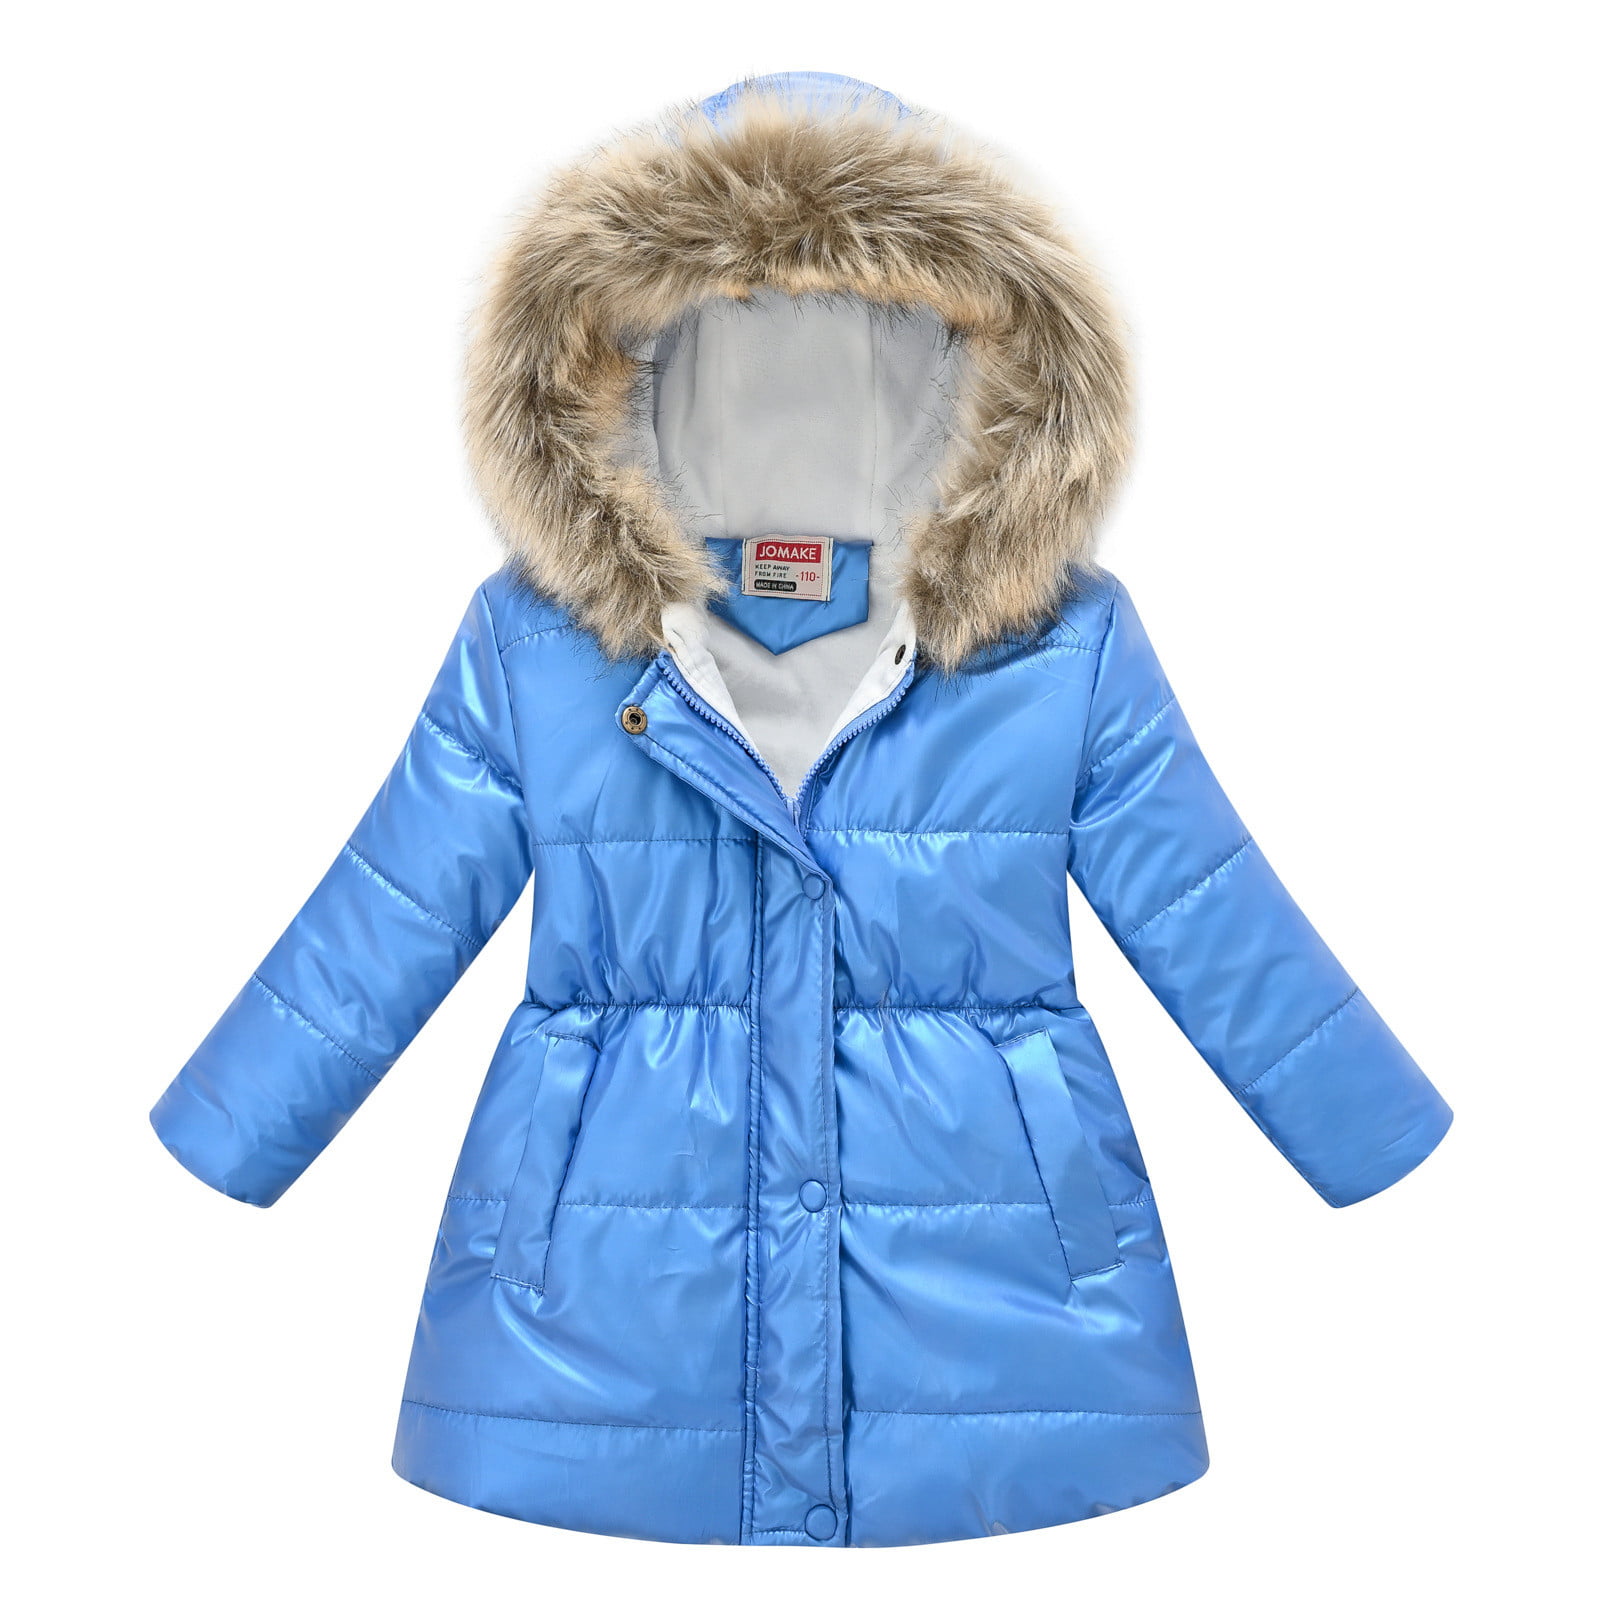 Kids Boy Girls Hoodies Jacket Windproof Hooded Coat Warm Outerwear Tops Clothes 